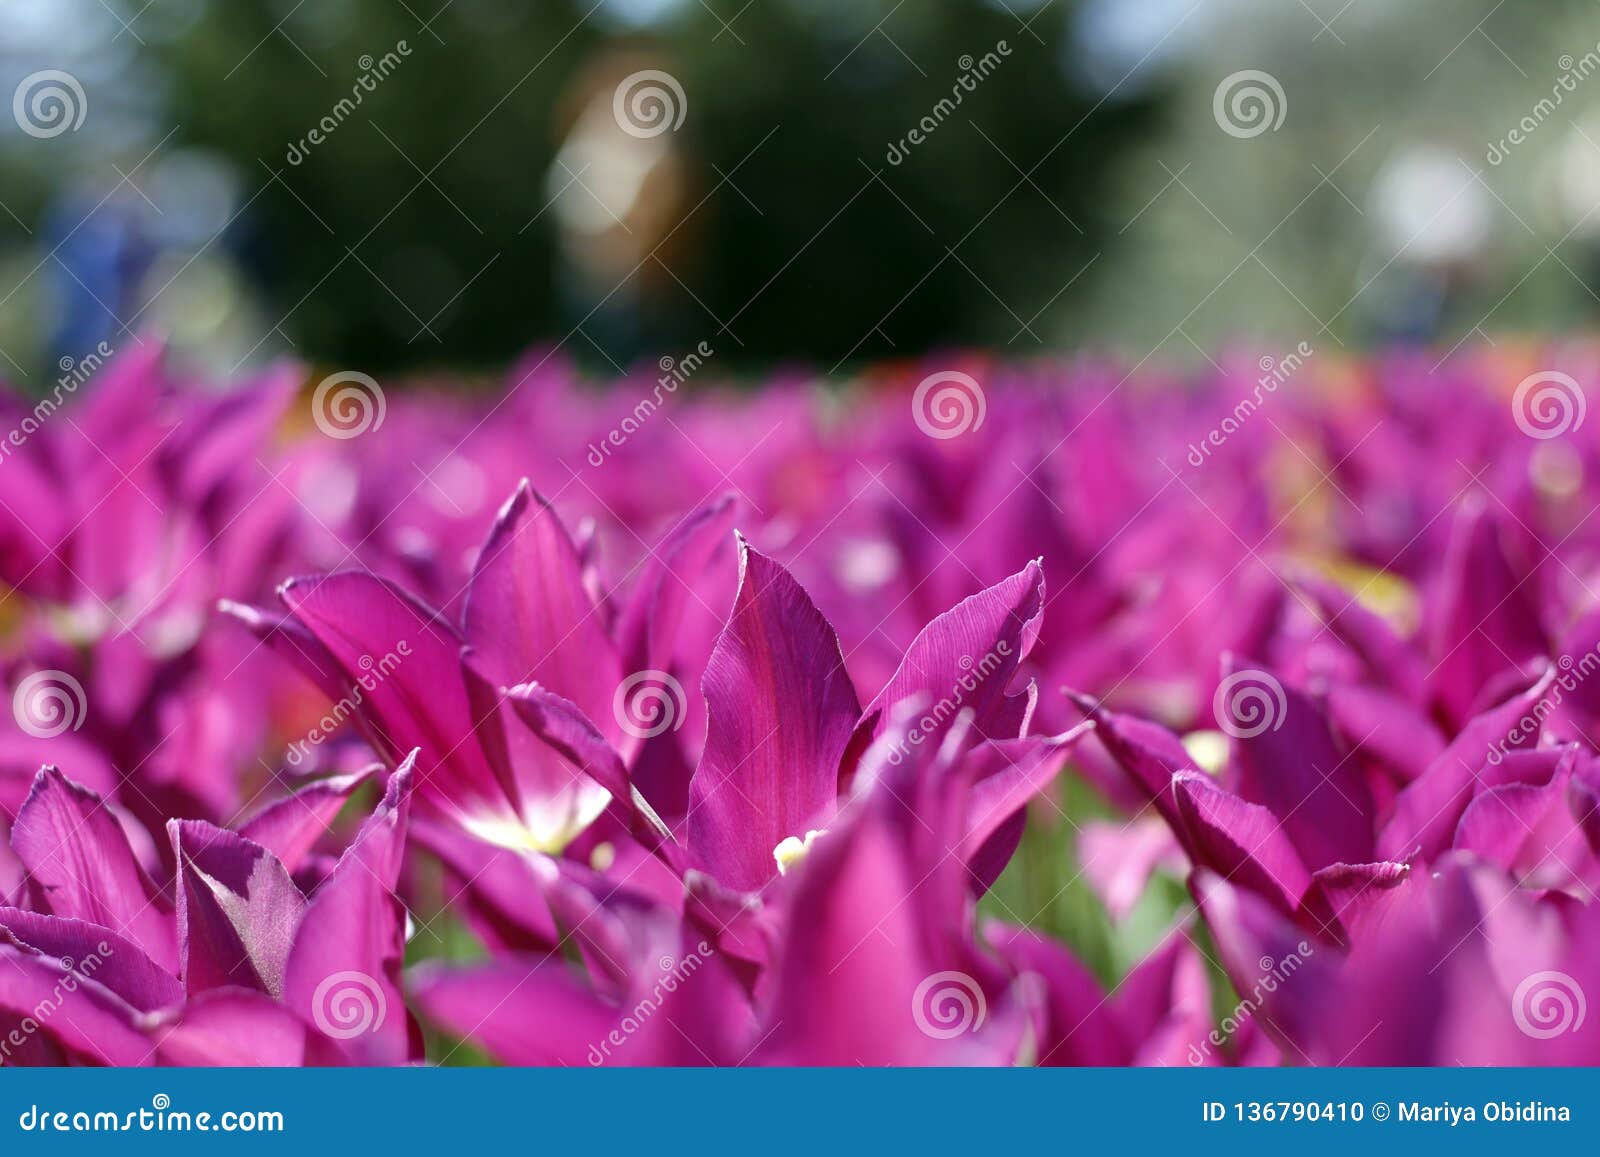 tulips amazing spring flowers. purple tulips flowers of love